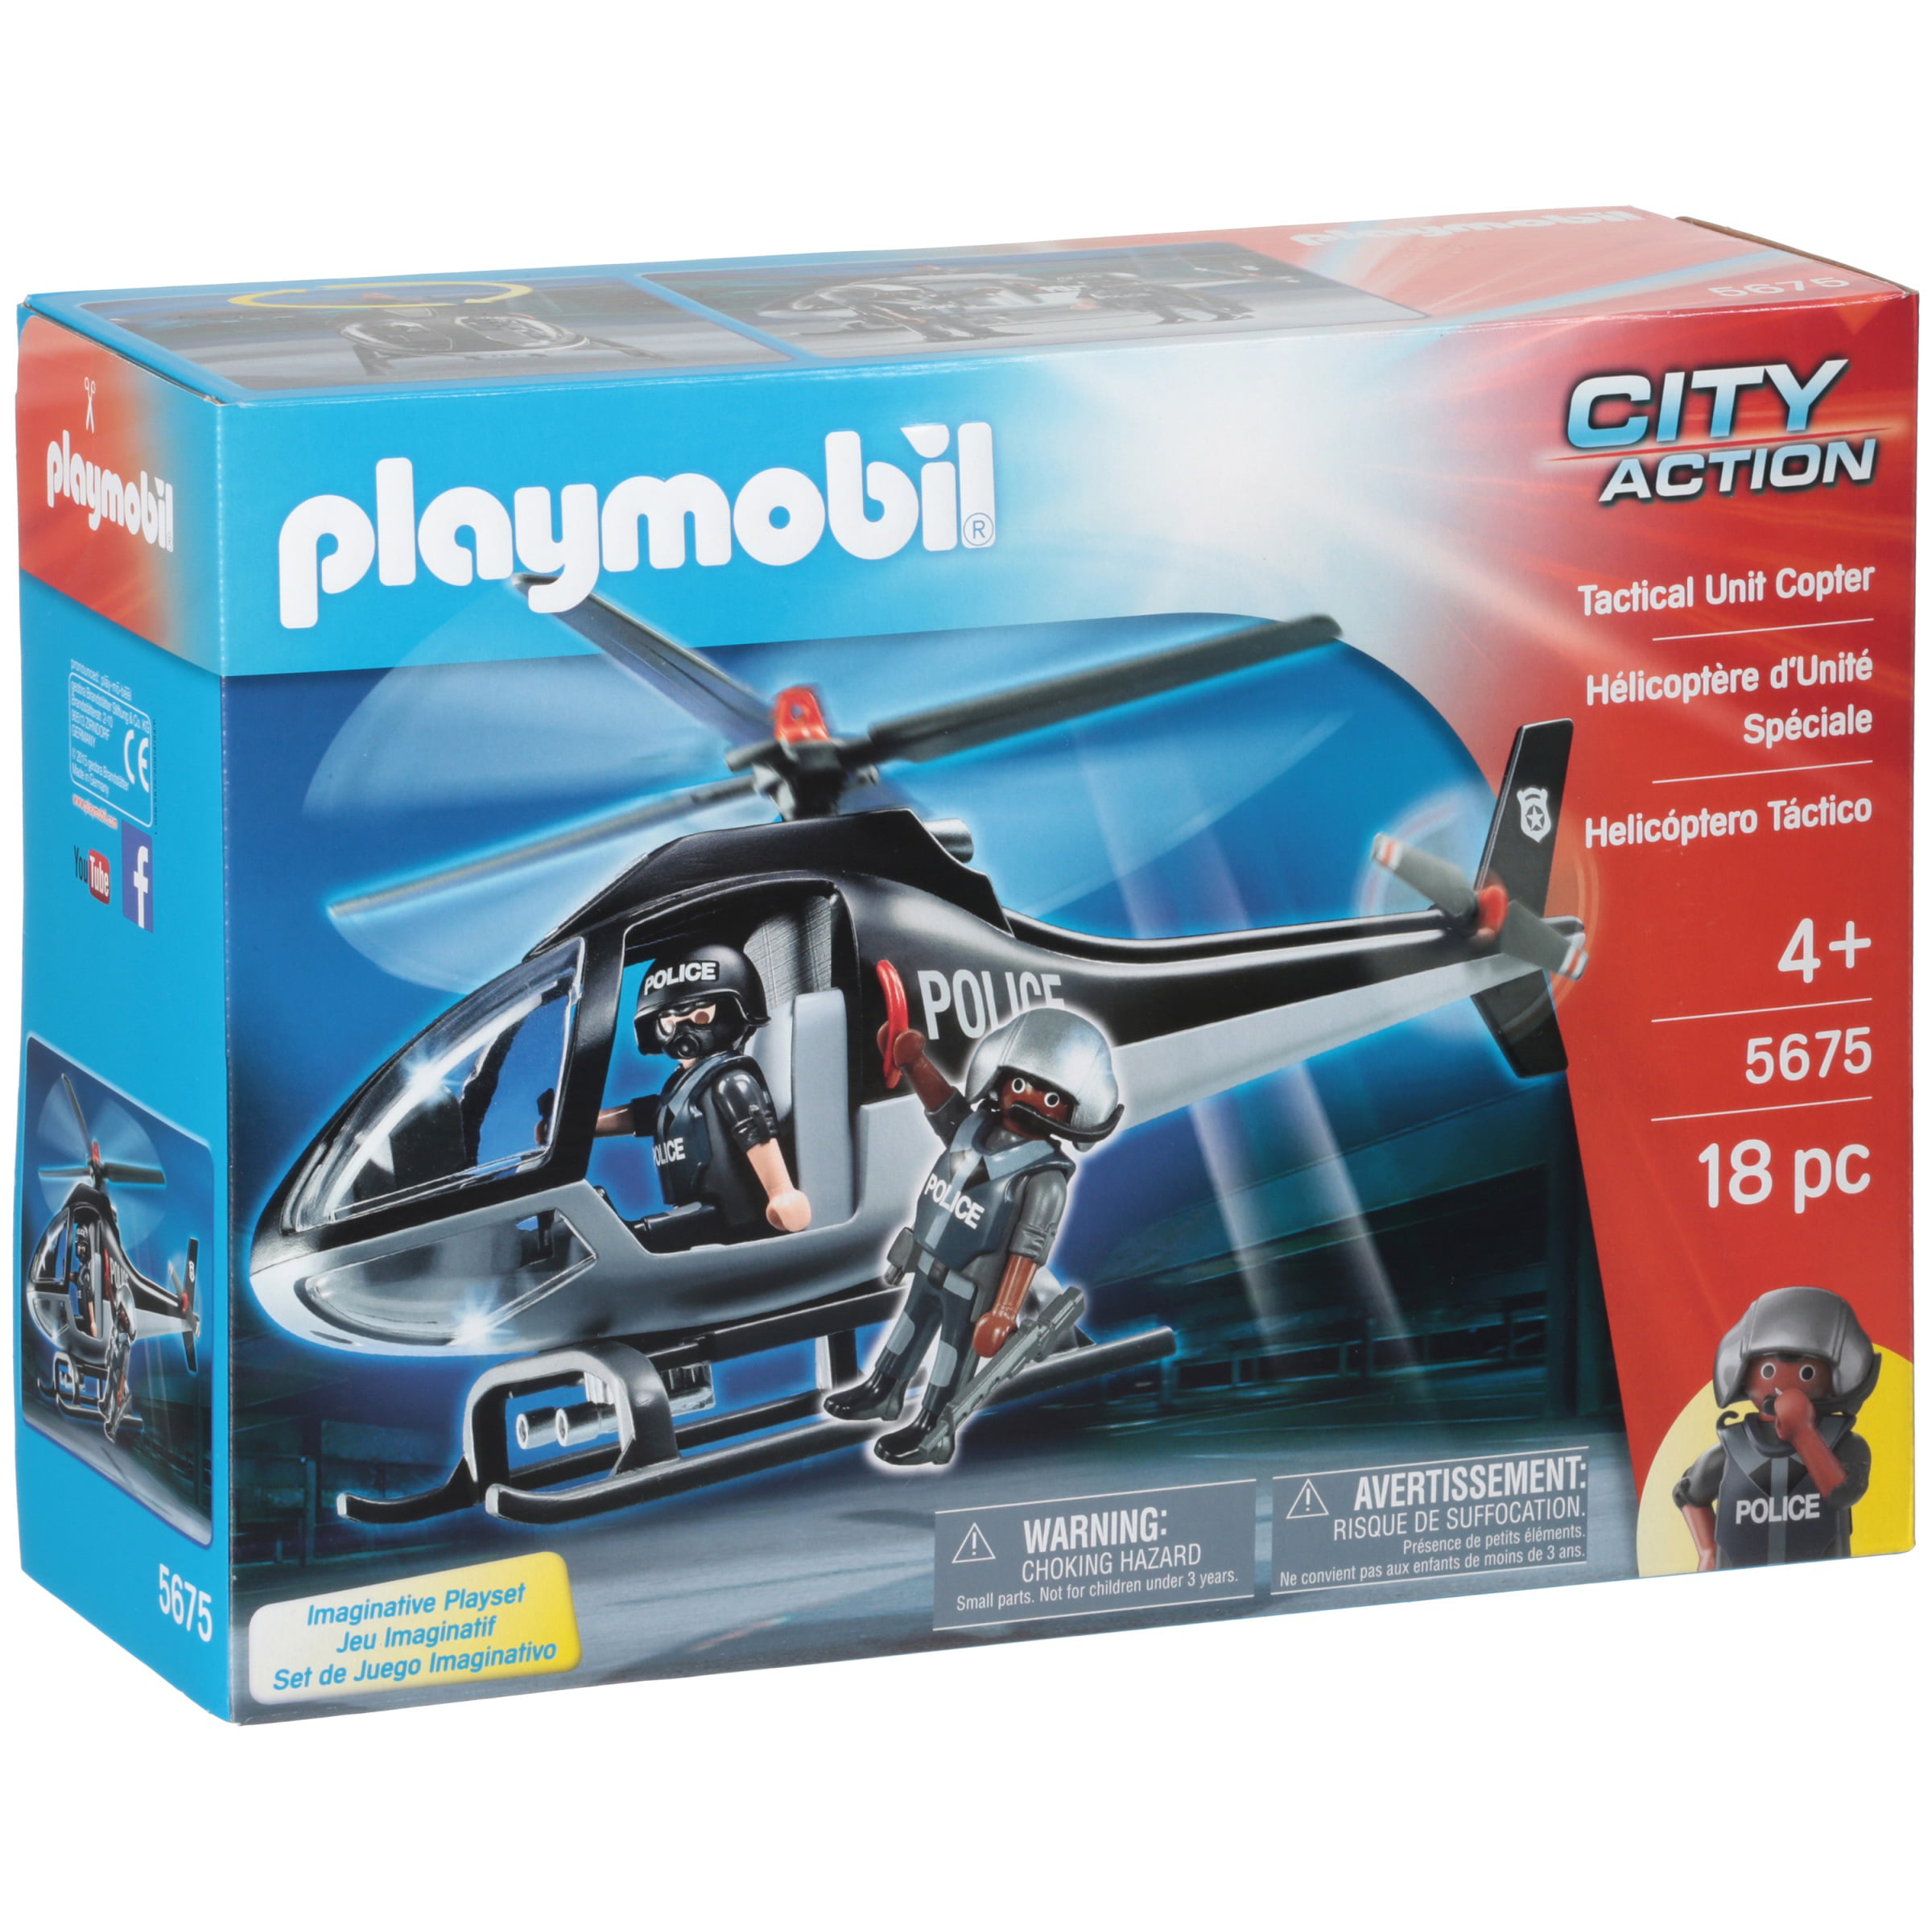 Playmobil City Life 5675 Tactical Unit Copter SEK POLIZEI Hubschrauber OVP NEU 